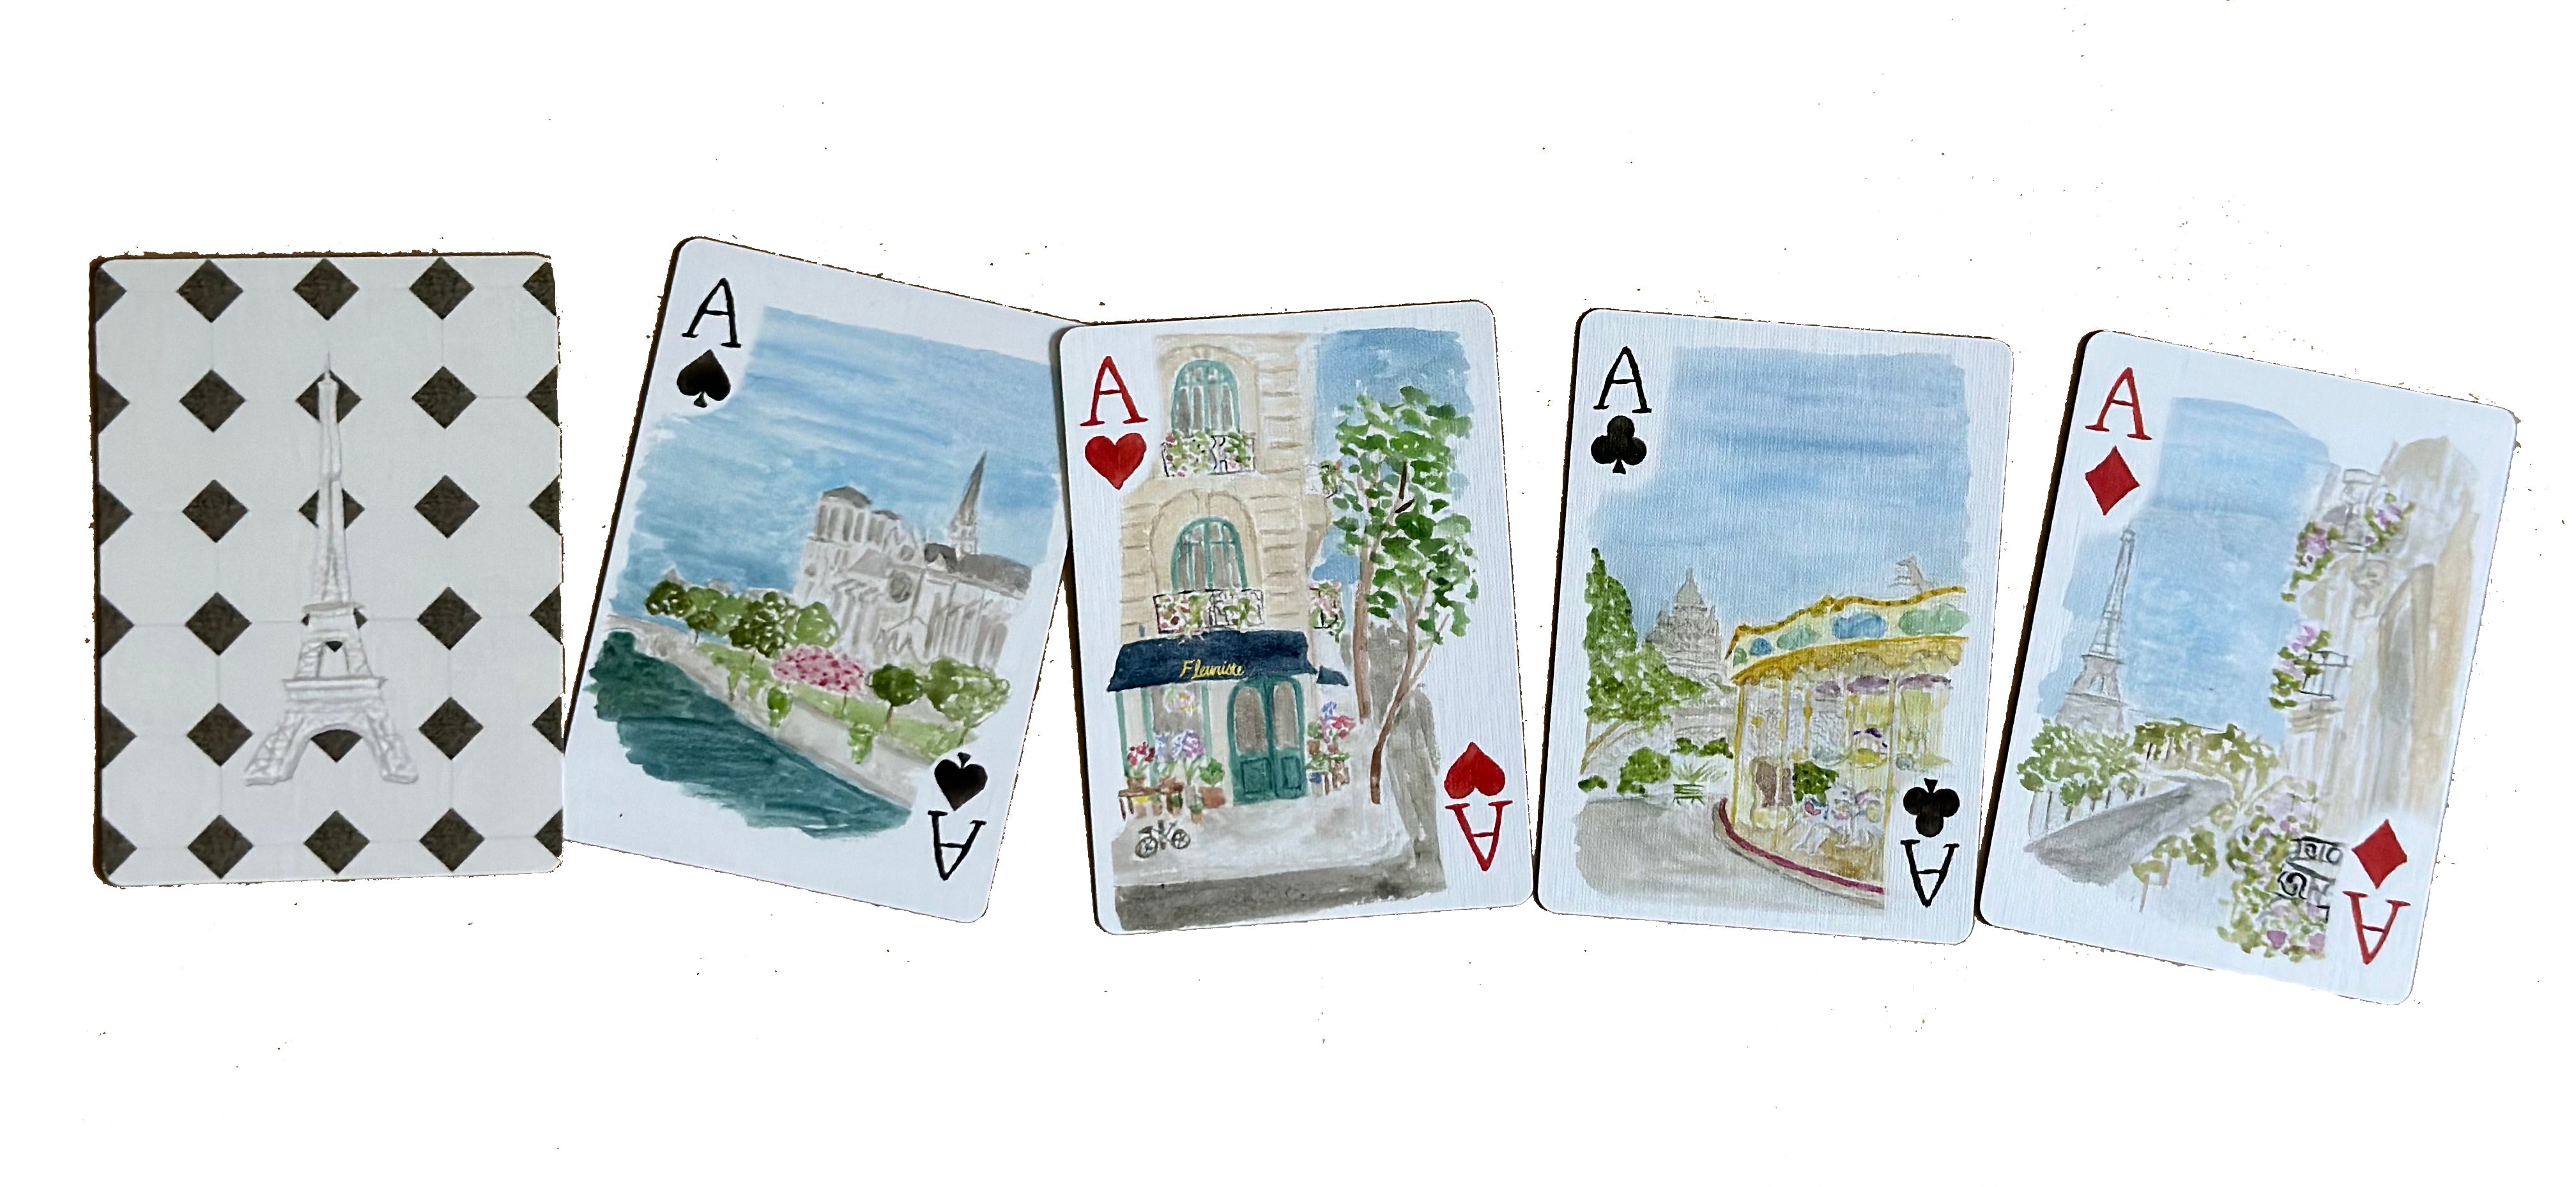 Paris Playing Cards